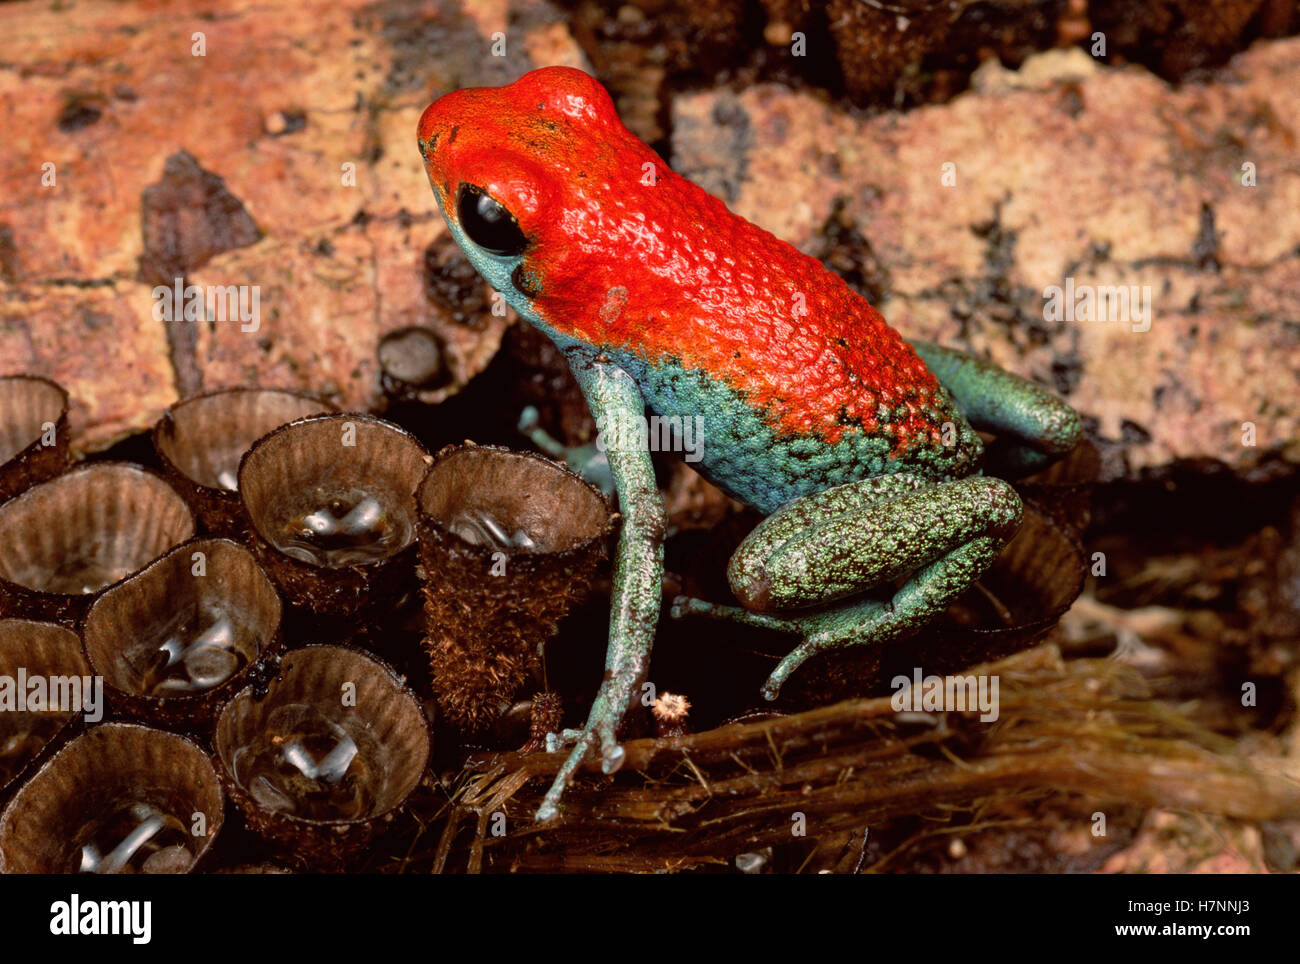 Granular Poison Dart Frog (Dendrobates granuliferus) portrait on bird's nest fungus, Corcovado National Park, Costa Rica Stock Photo